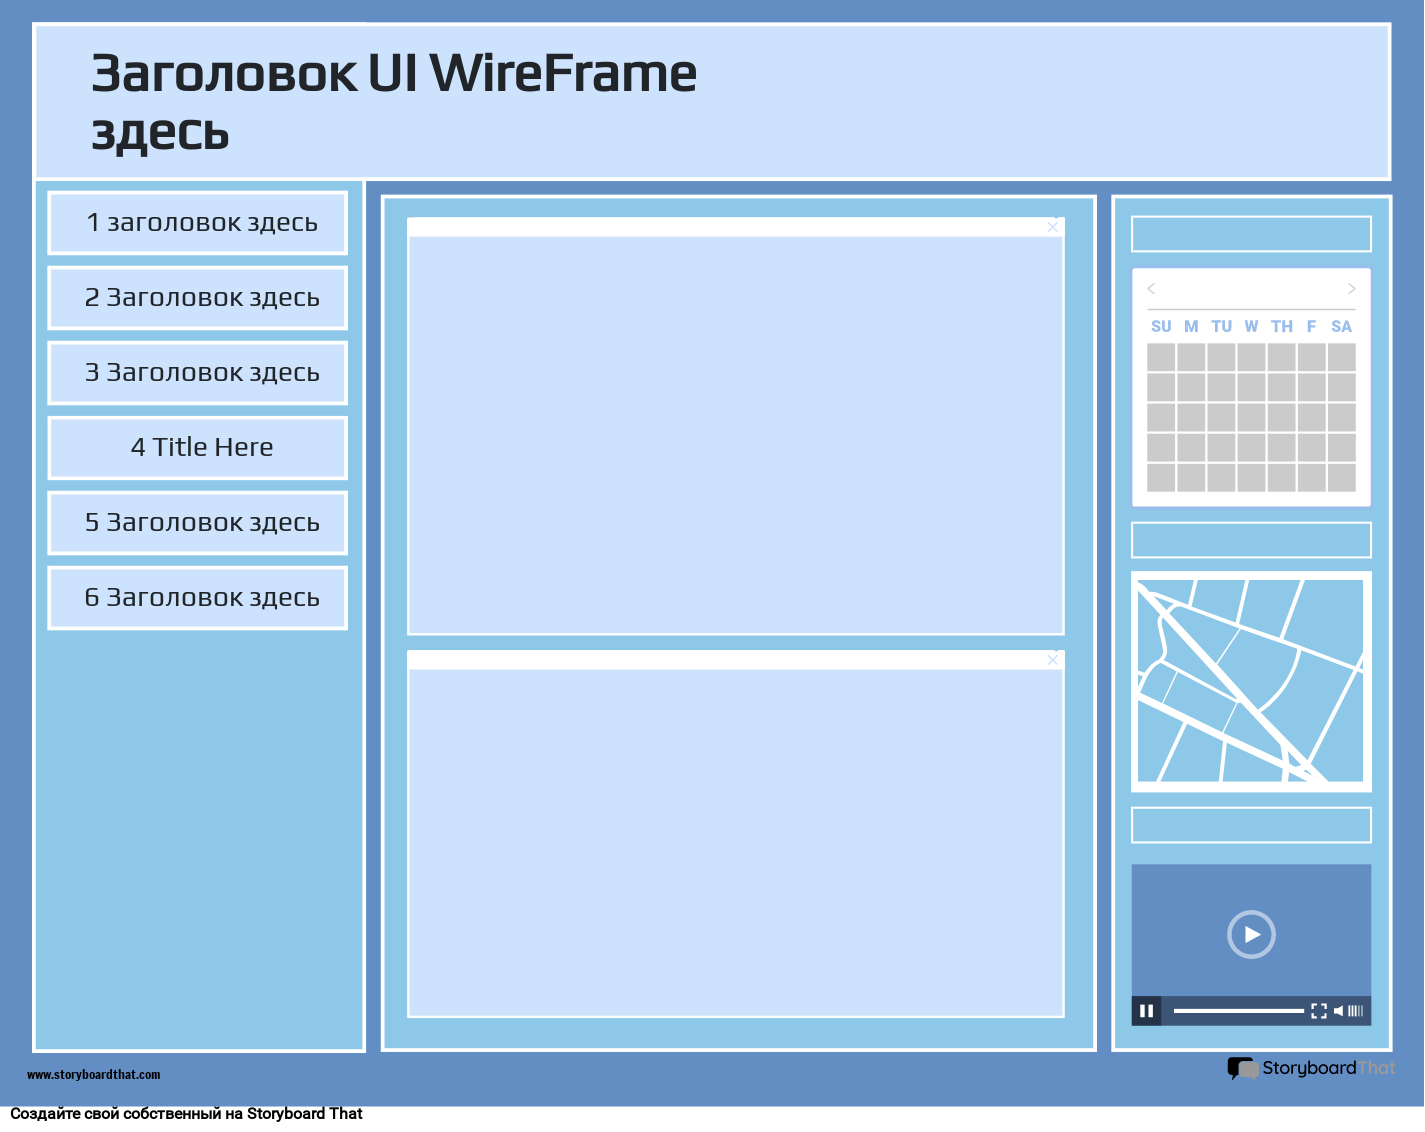 Шаблон WireFrame Корпоративного Пользовательского Интерфейса 1